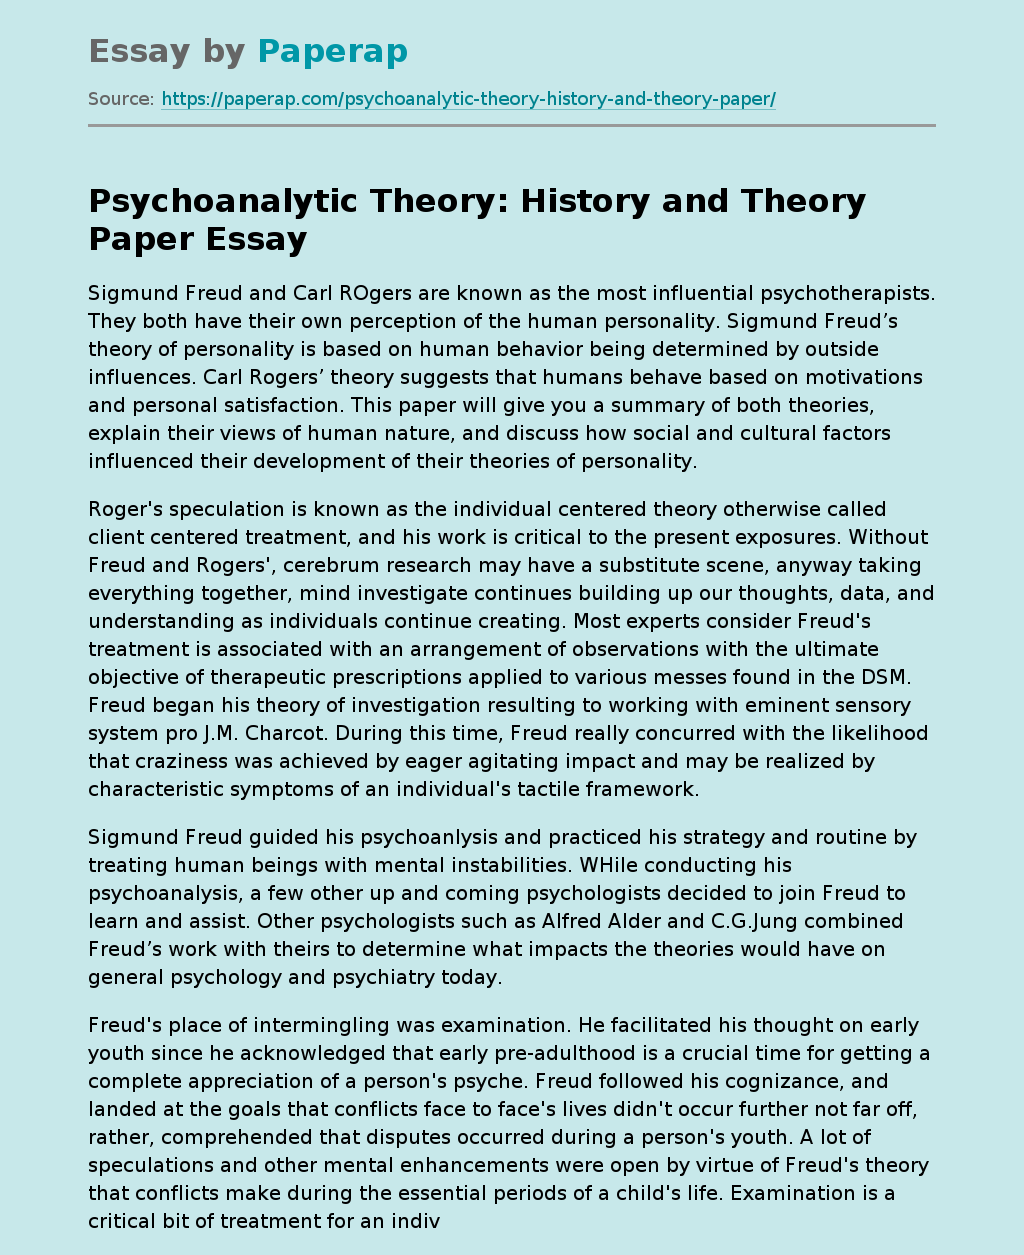 Psychoanalytic Theory: History and Theory Paper